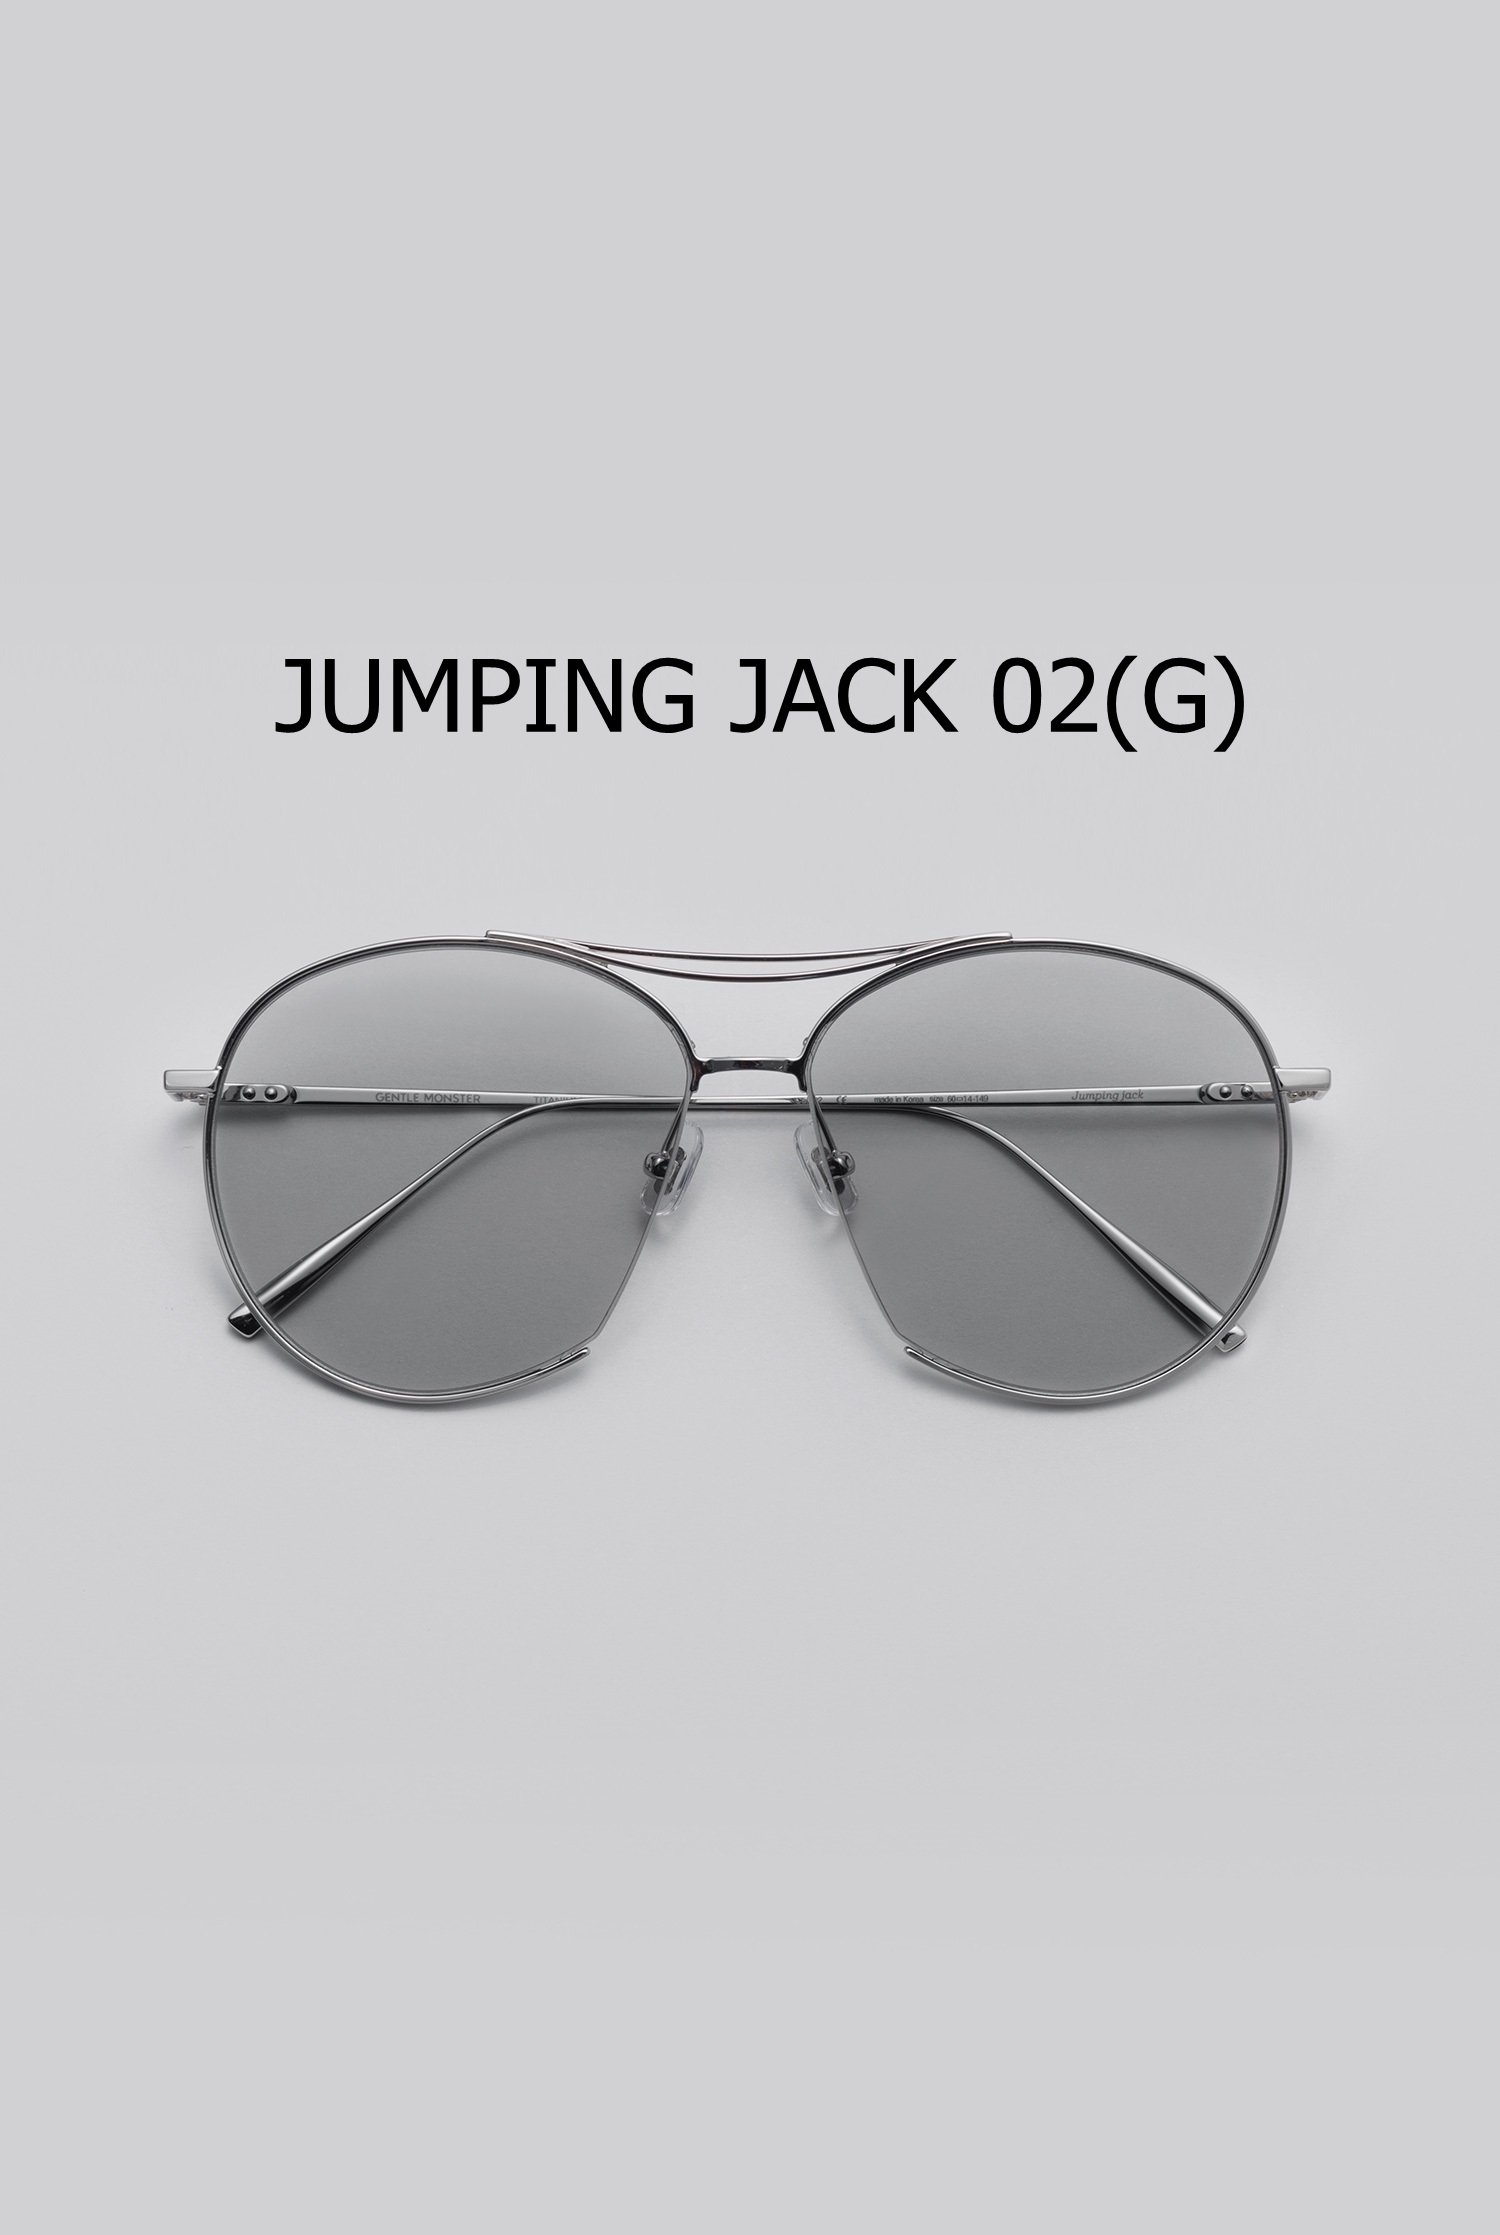 JUMPING JACK 02(G)